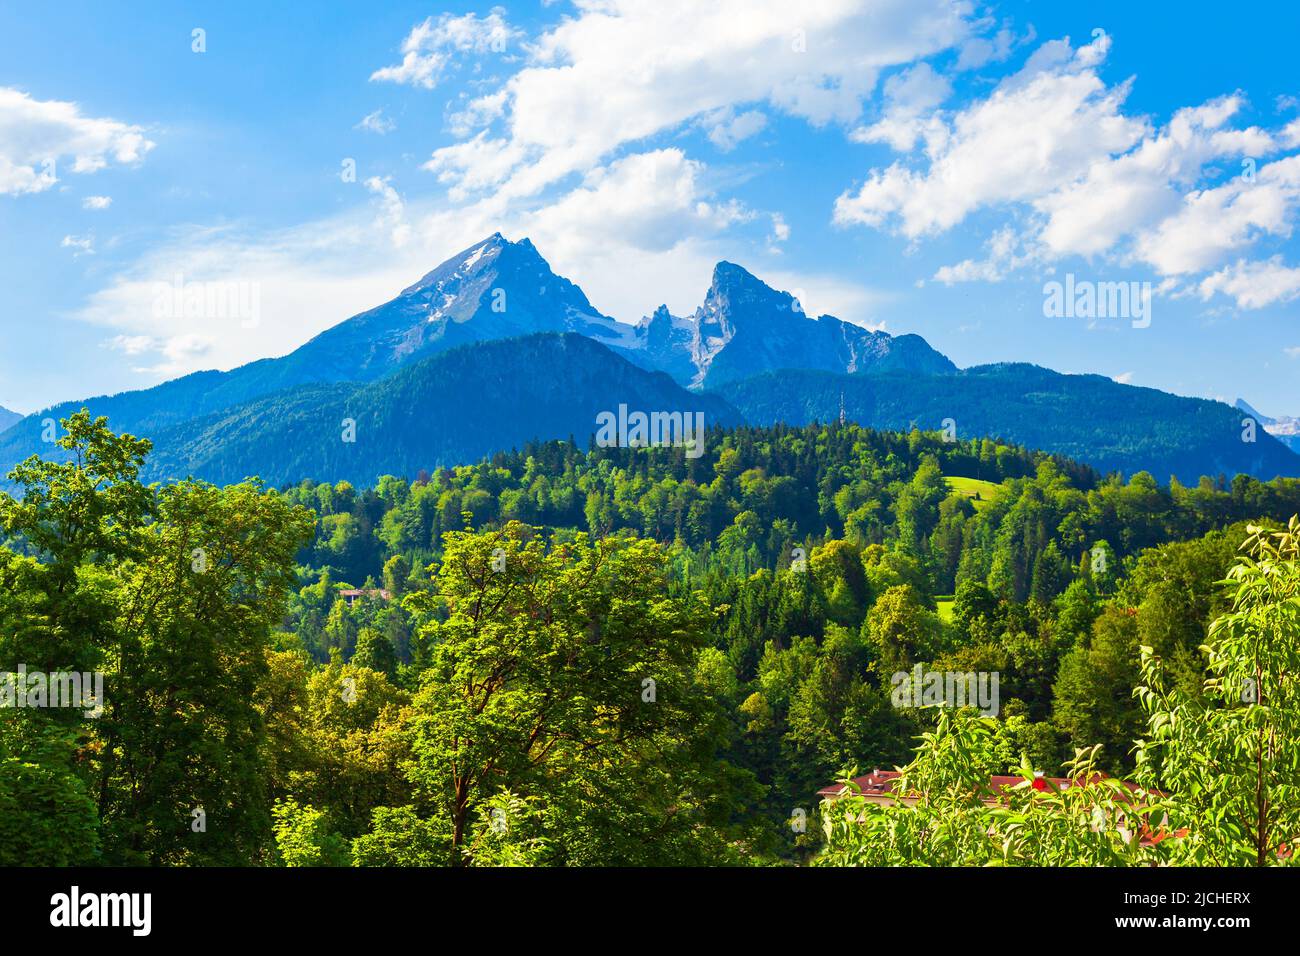 The Watzmann is a mountain in the Bavarian Alps near the Berchtesgaden village. The Watzmann is the third highest in Germany. Stock Photo